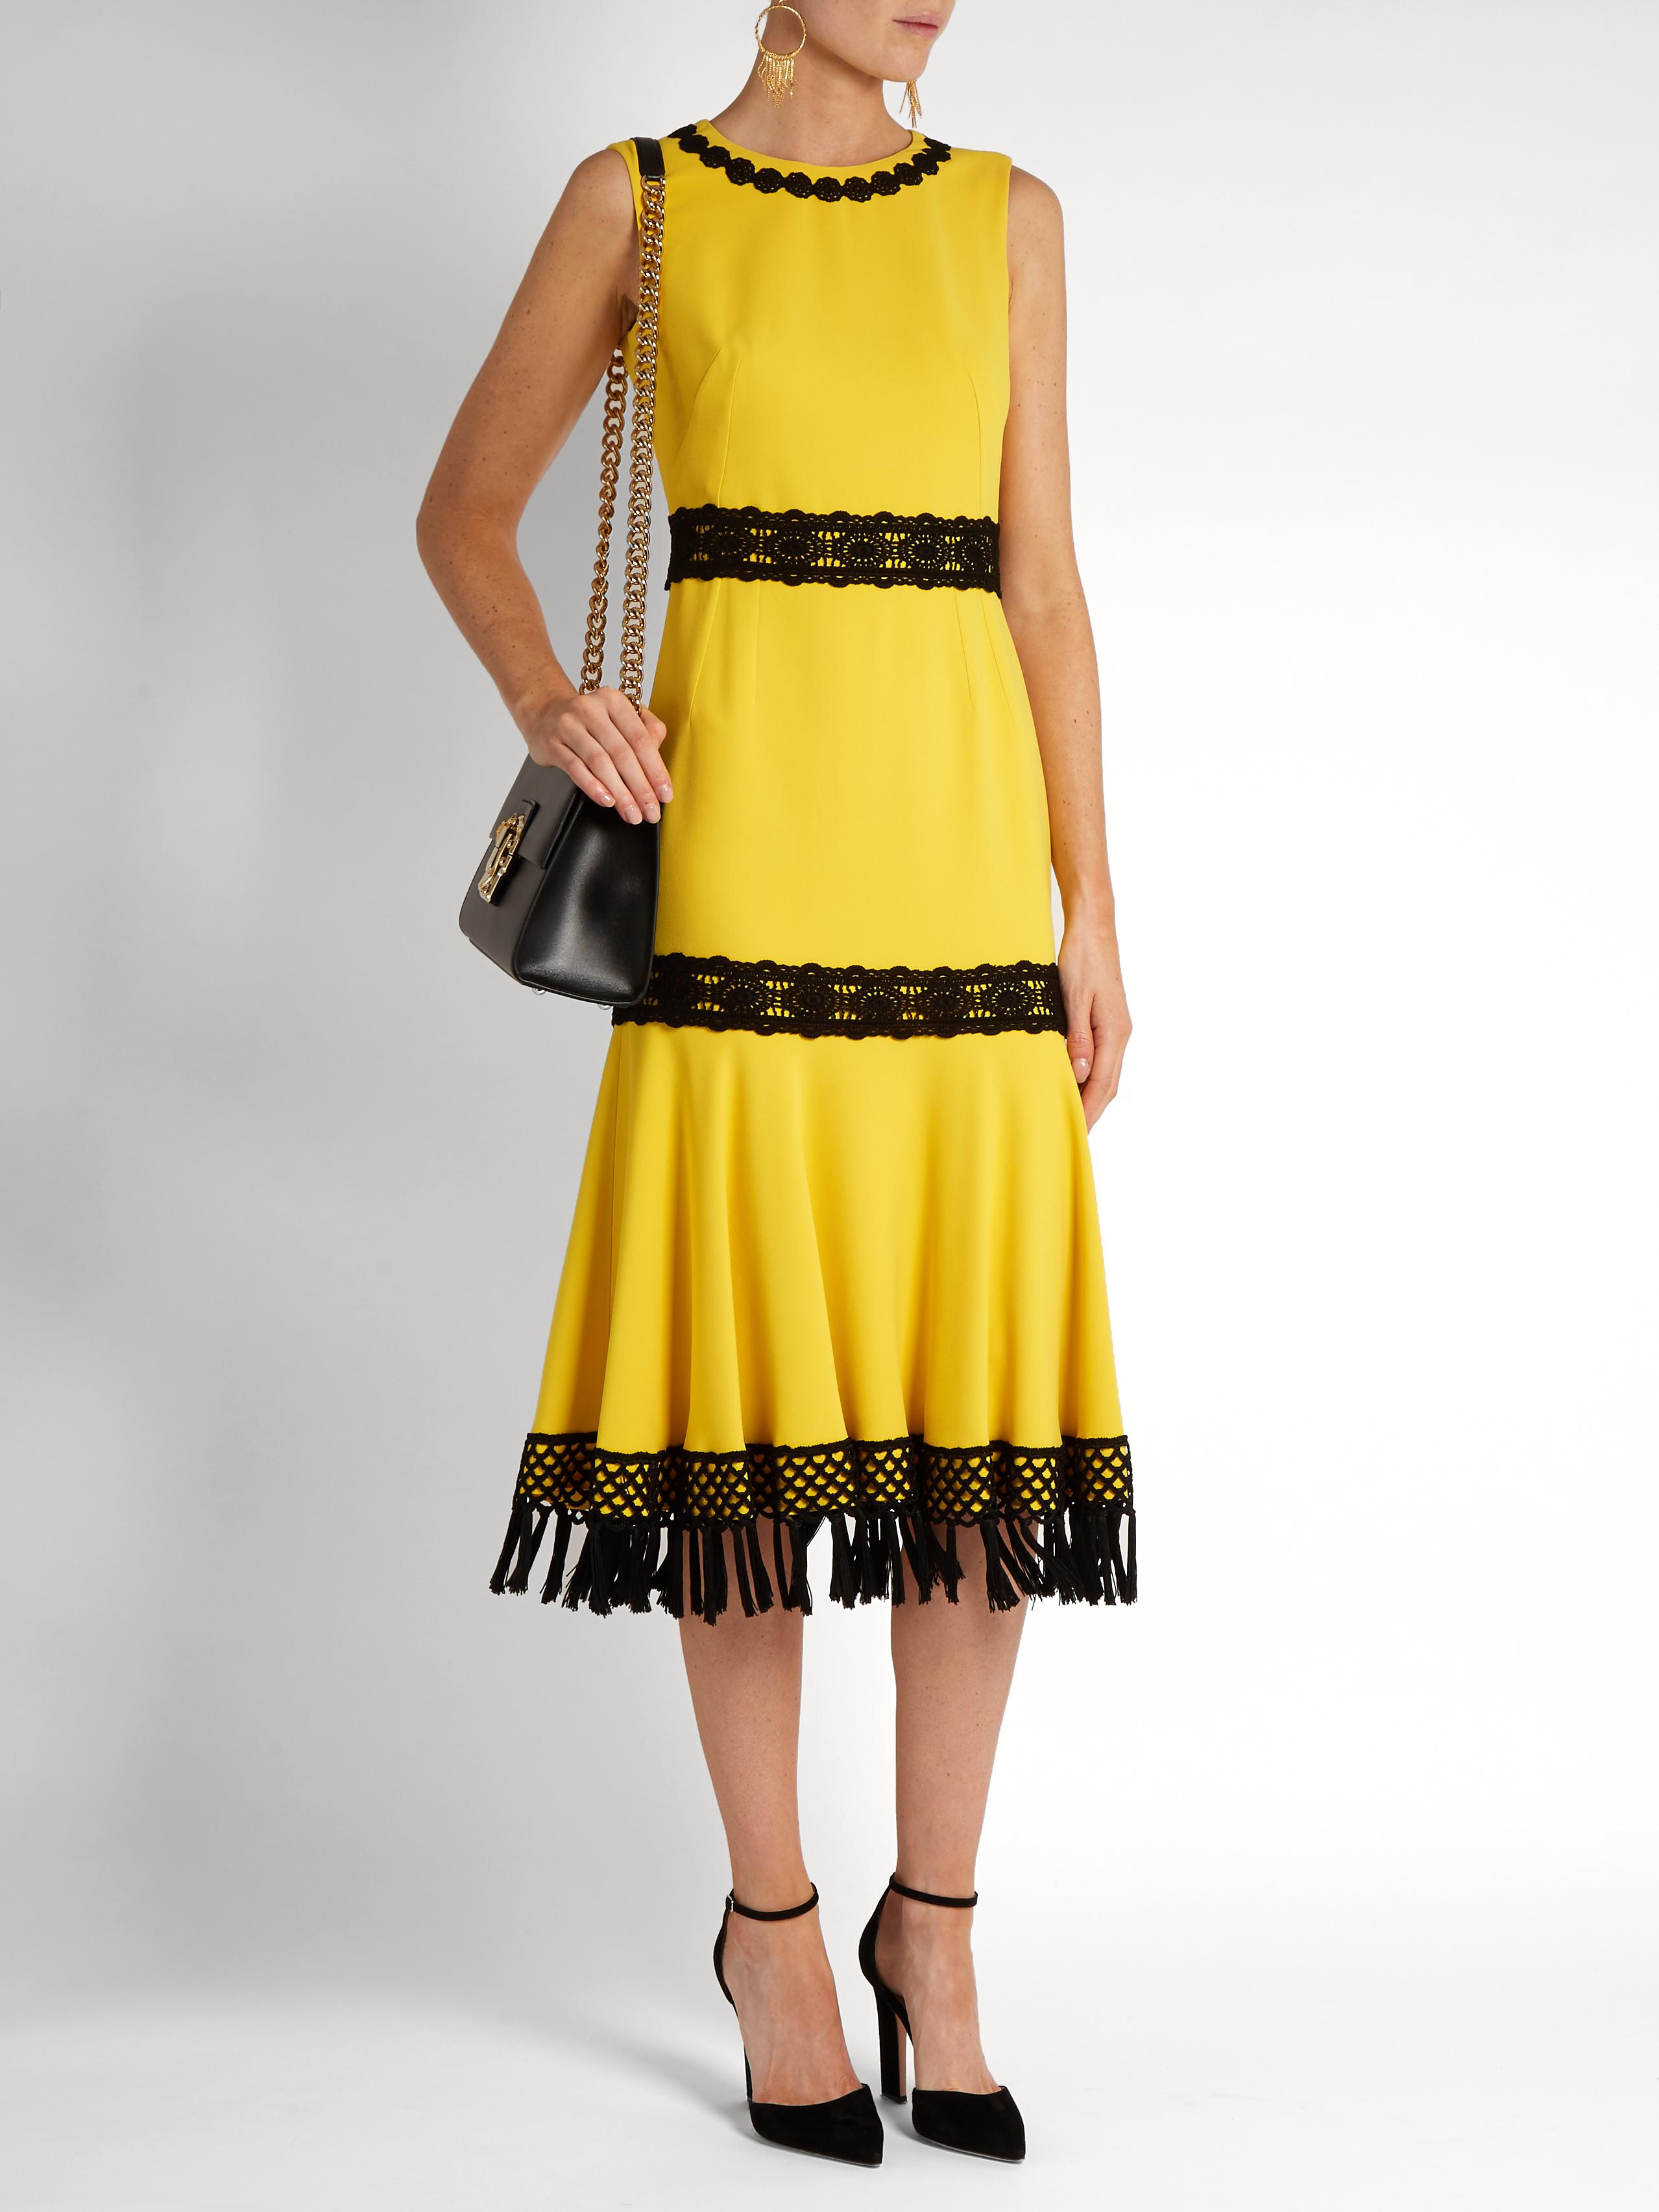 Dolce & Gabbana Crochet-trimmed Stretch-cady Dress in Yellow - Lyst